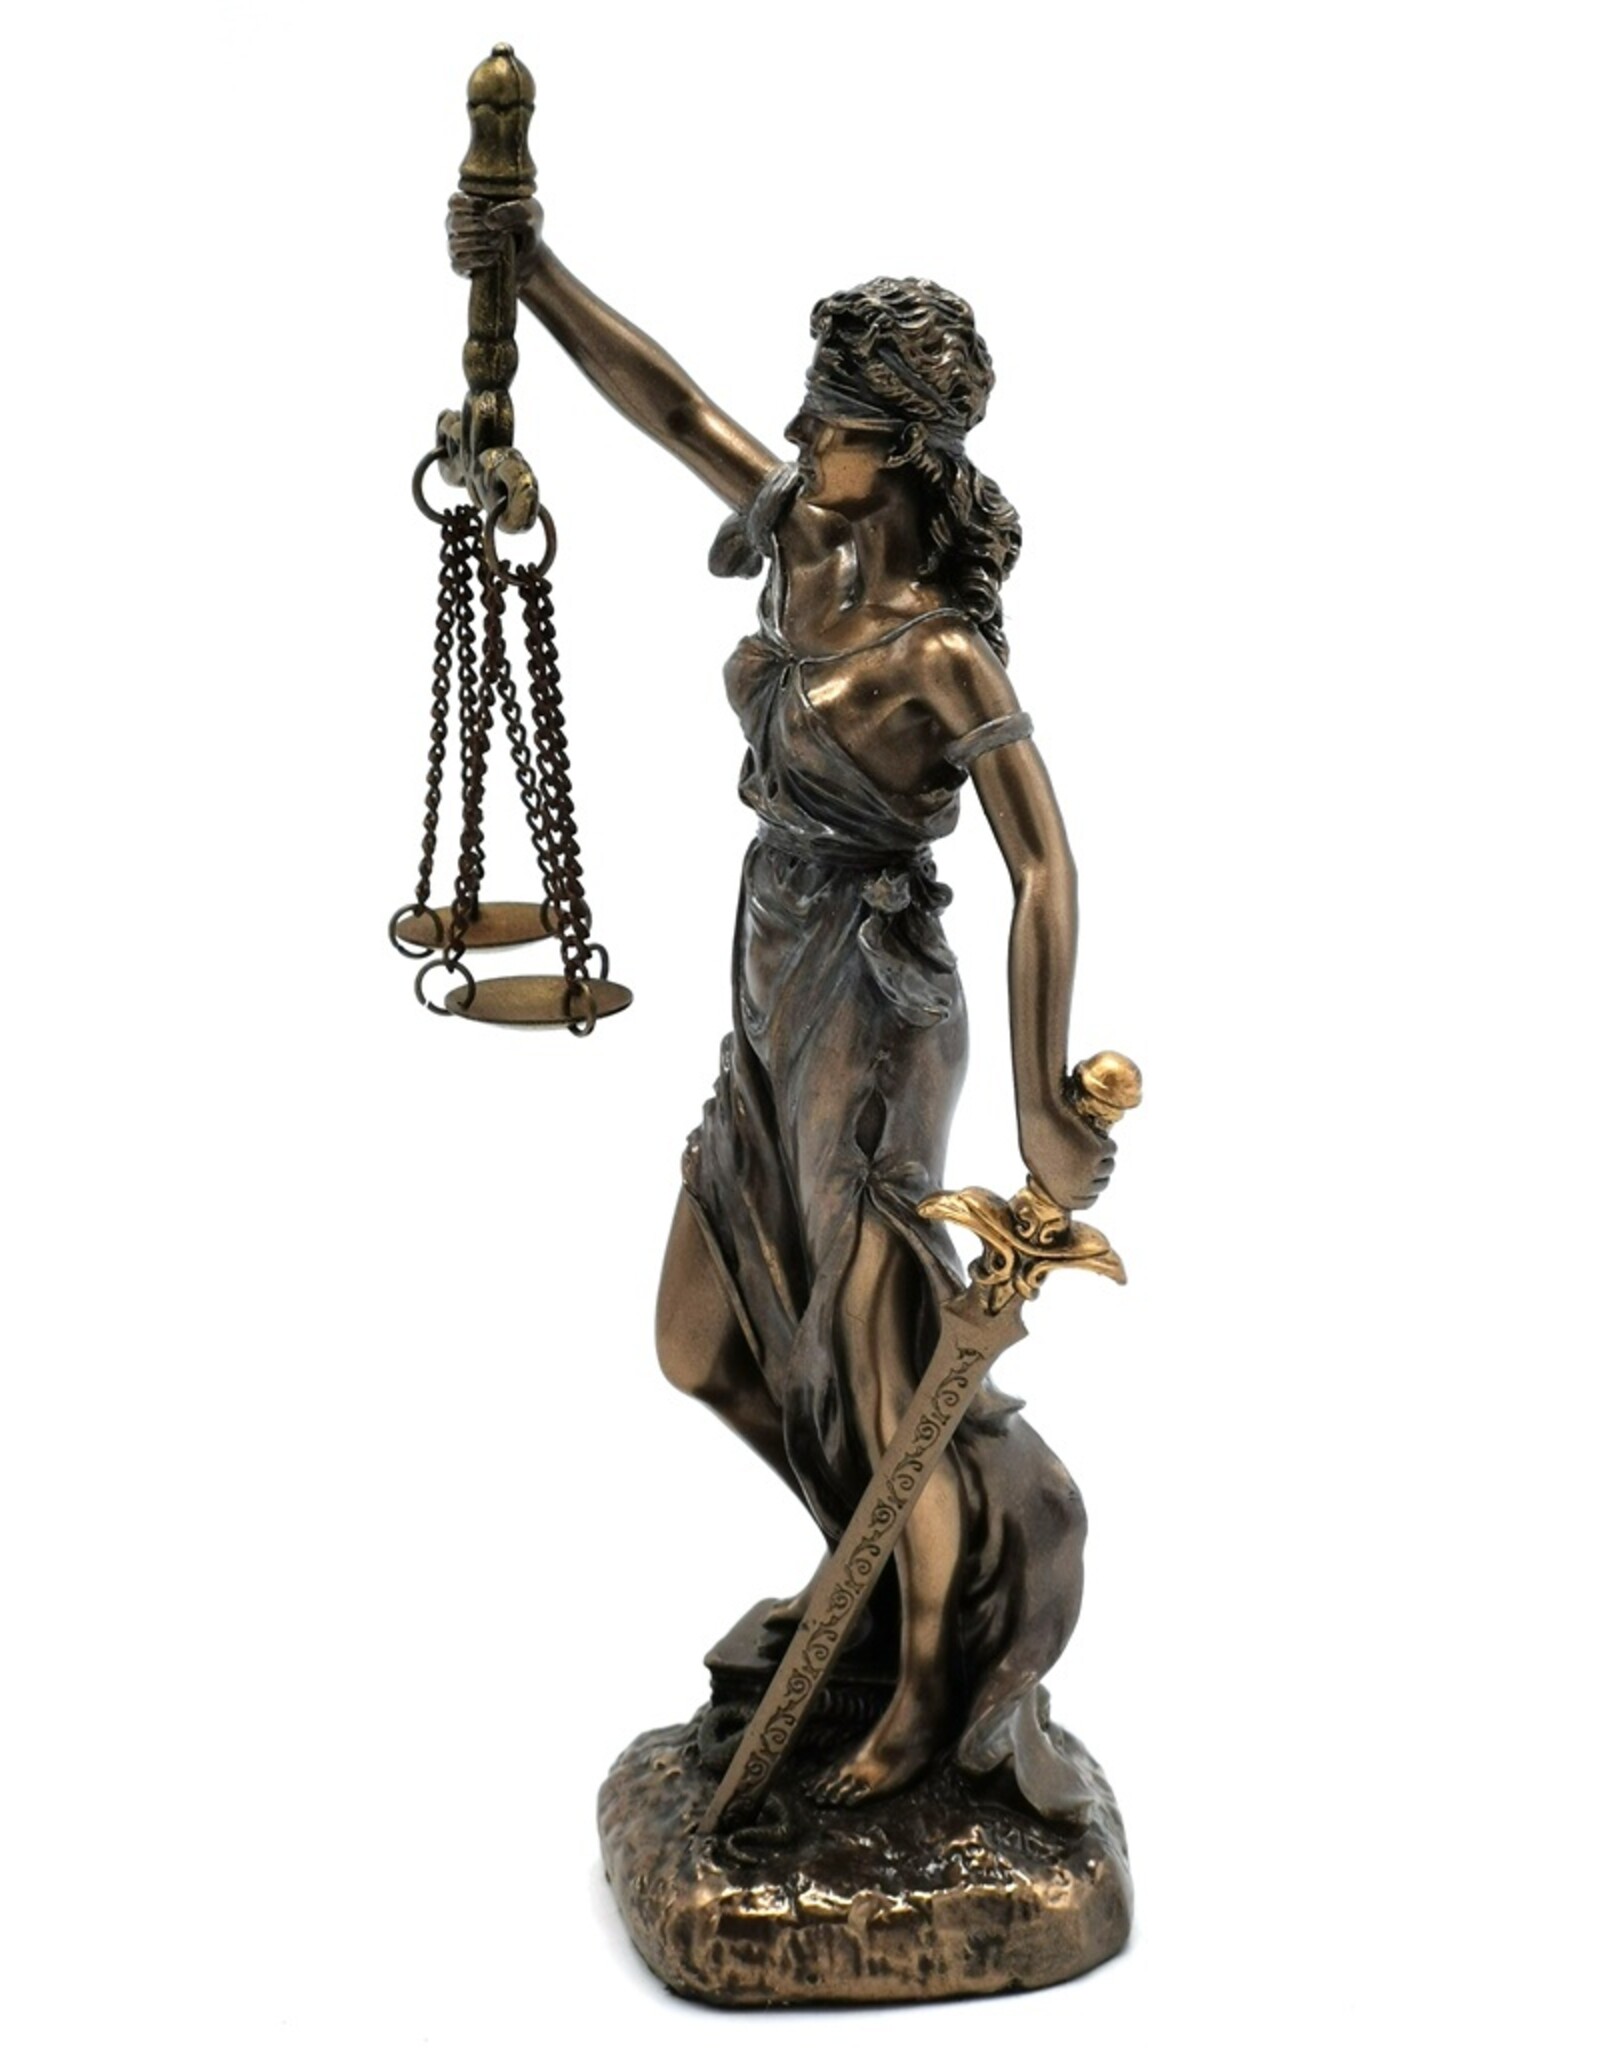 Veronese Design Giftware Figurines Collectables - Justice Roman Goddess of Justice Veronese Design   - Copy